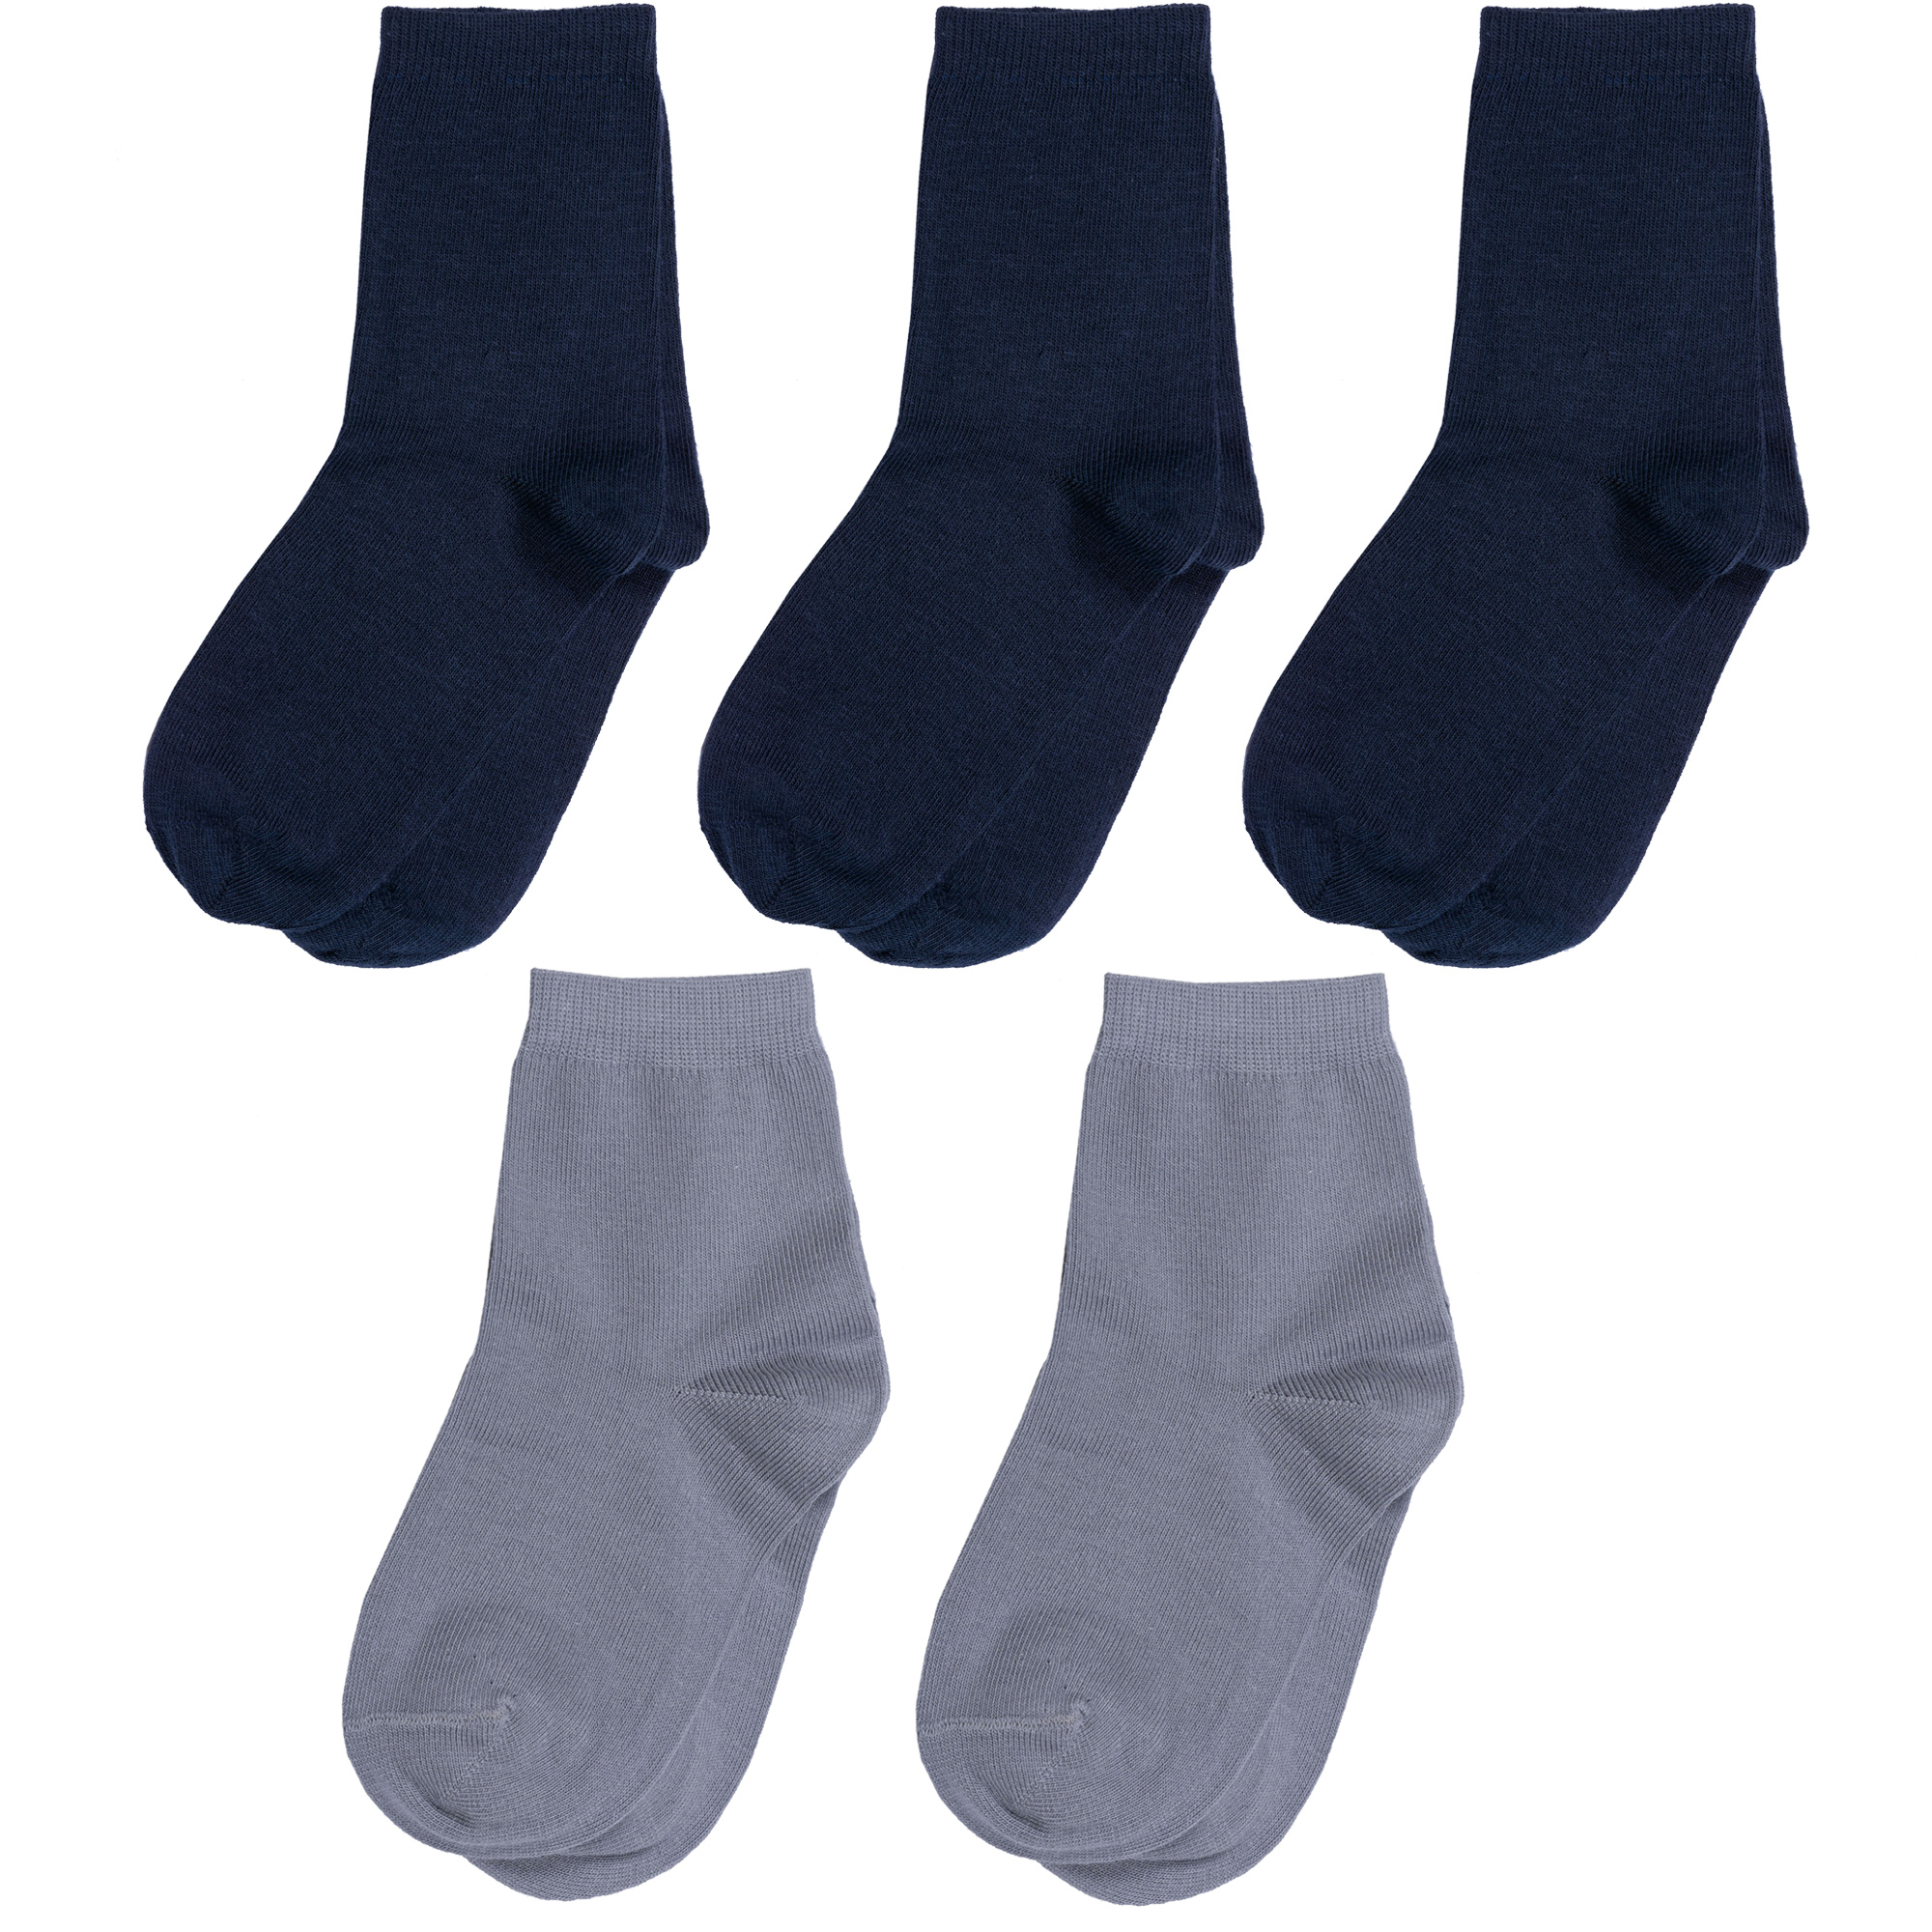 Носки для девочек ХОХ 5-d-1227 цв. синий; серый р. 24